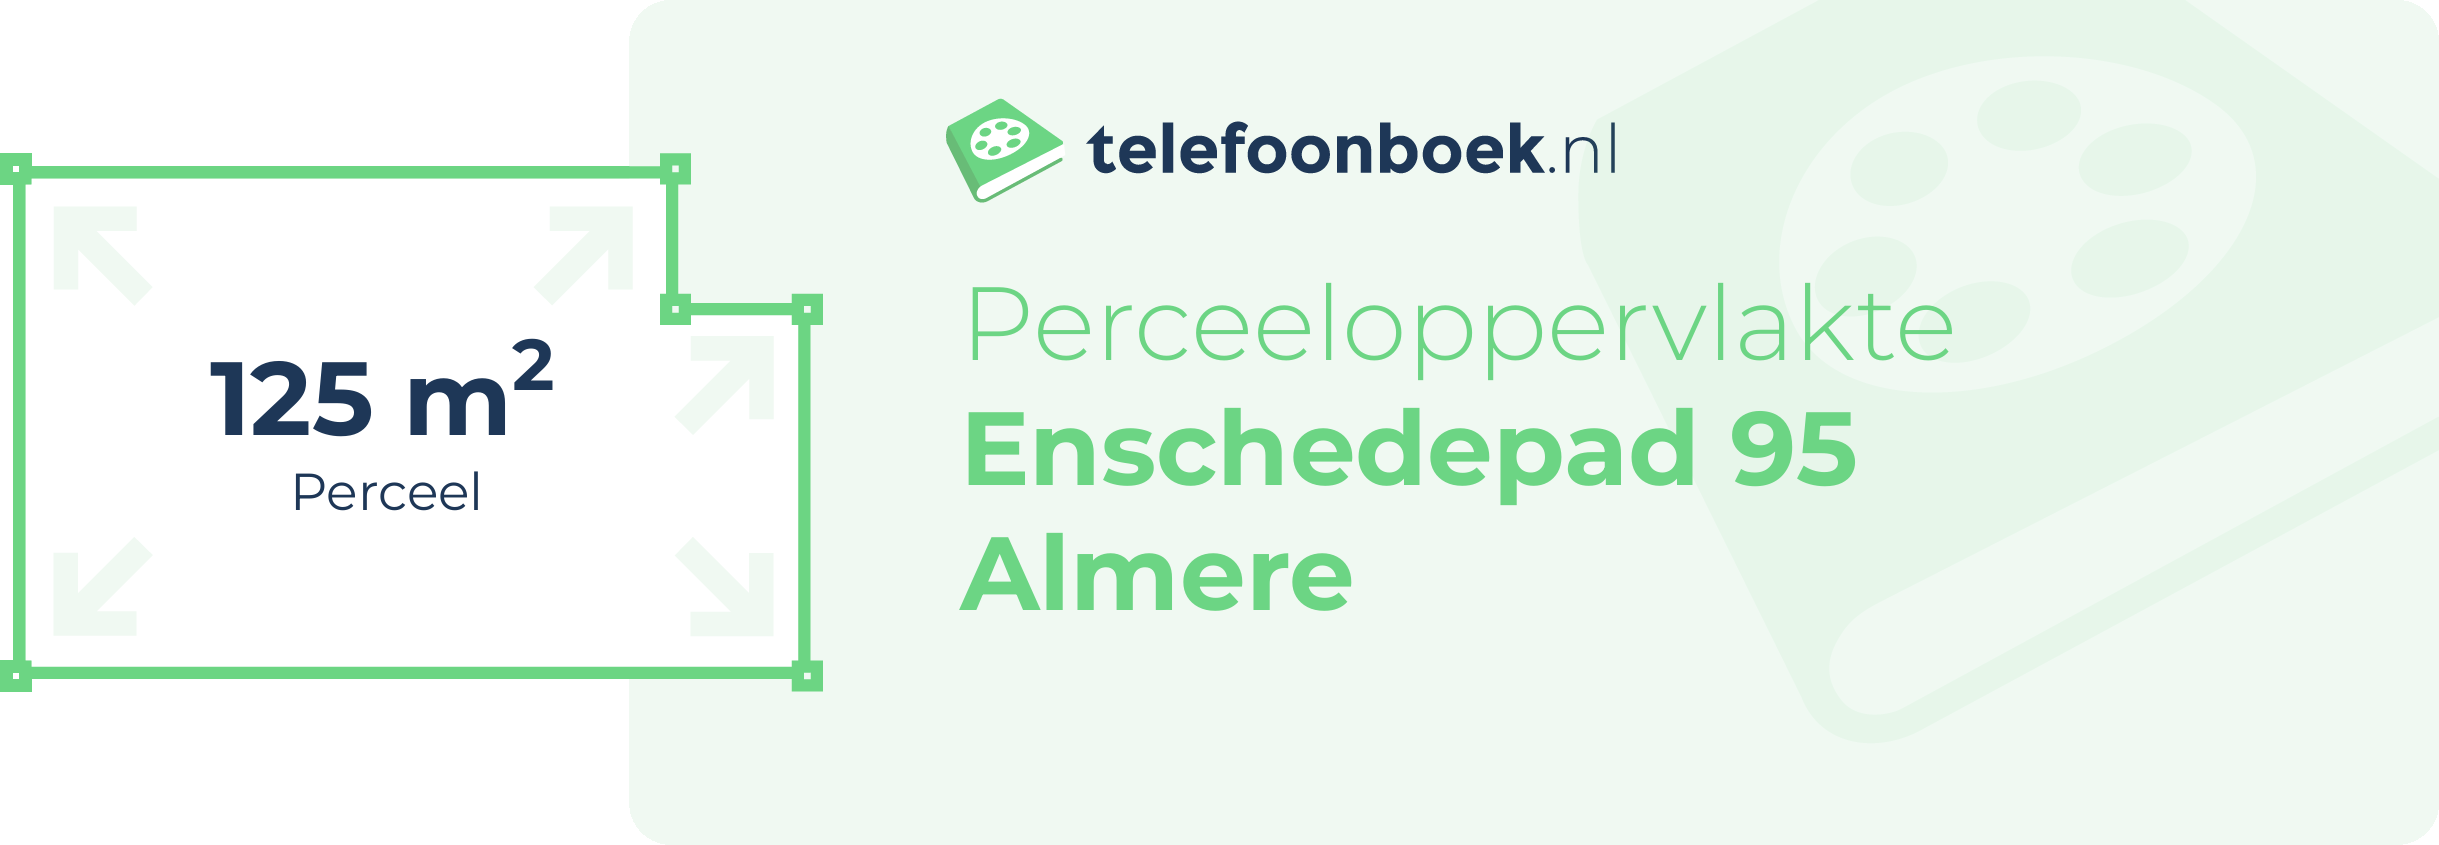 Perceeloppervlakte Enschedepad 95 Almere